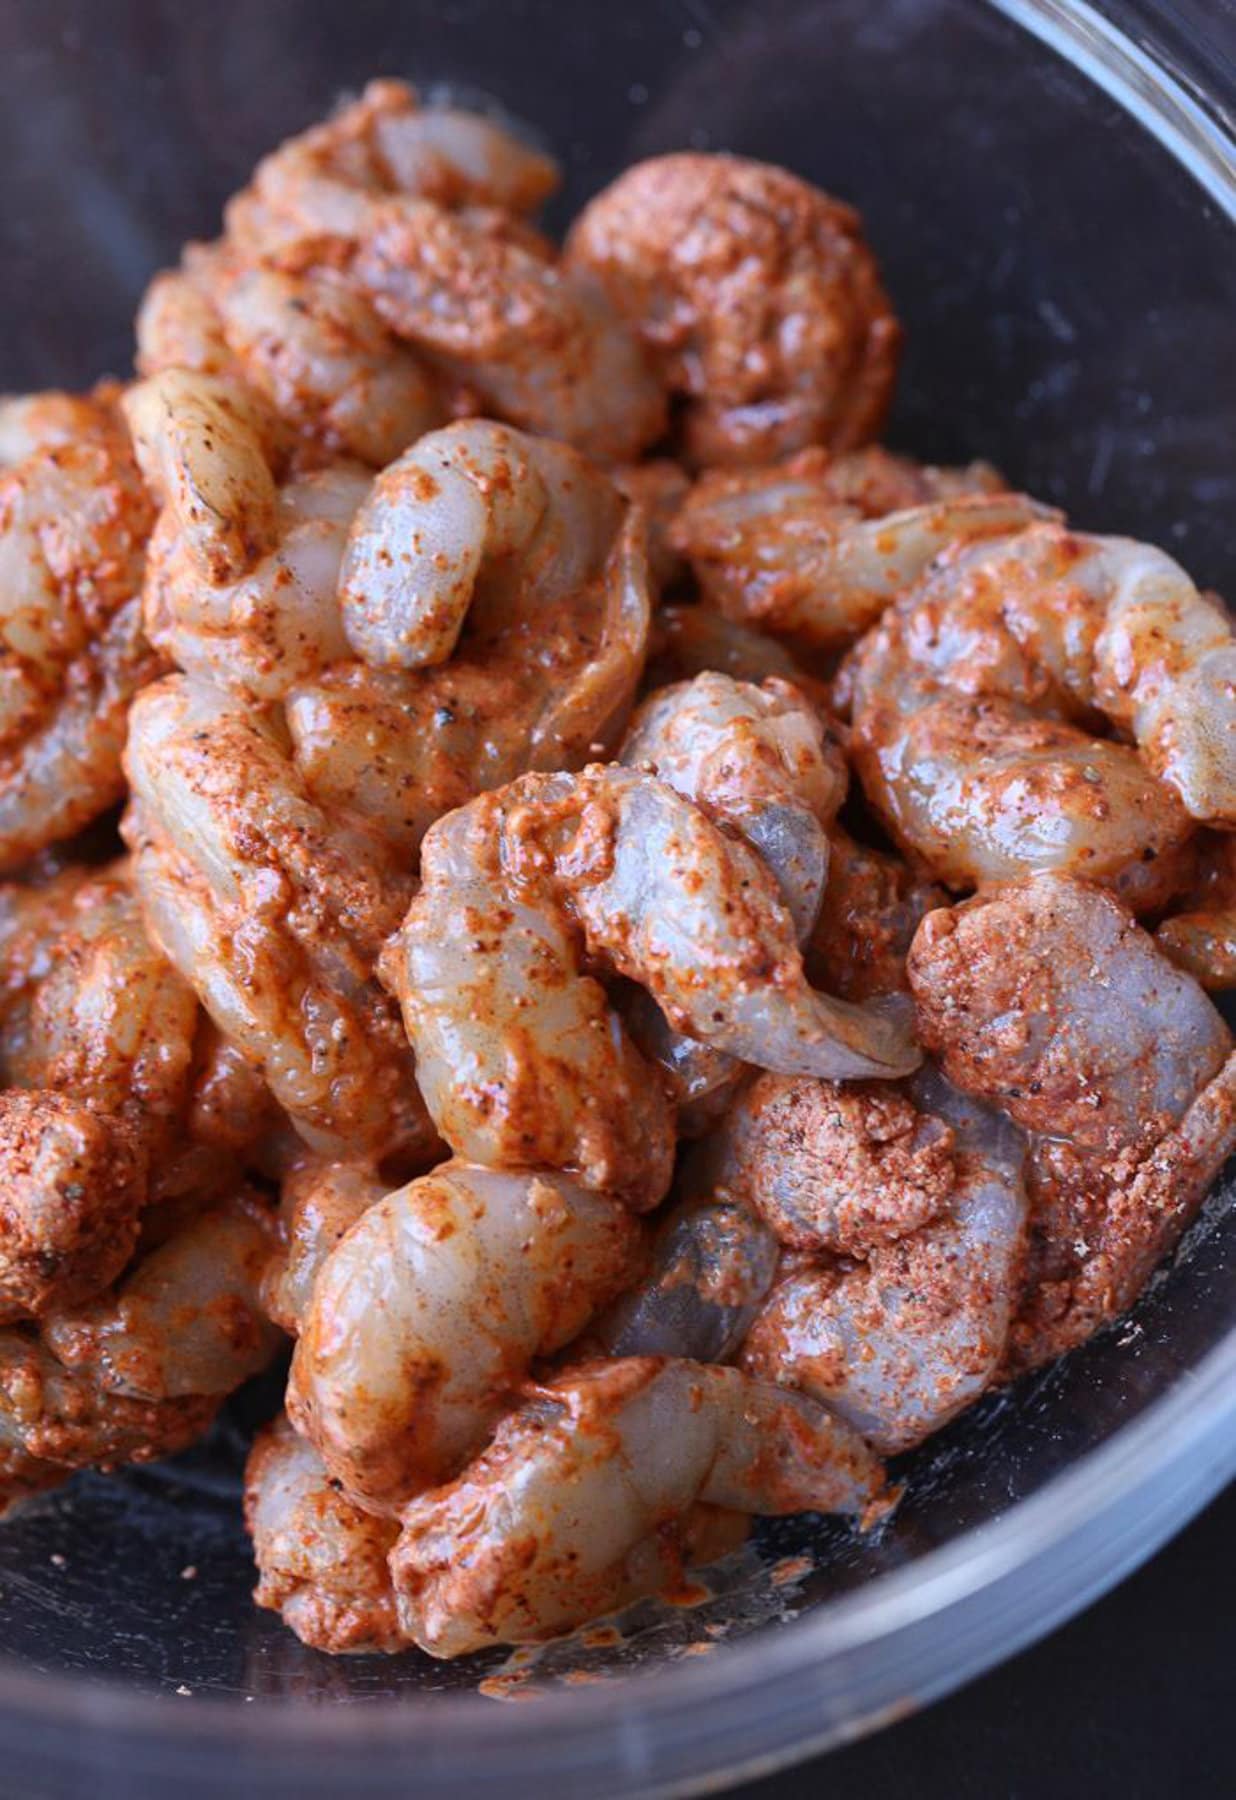 Seasoned shrimp before being fried